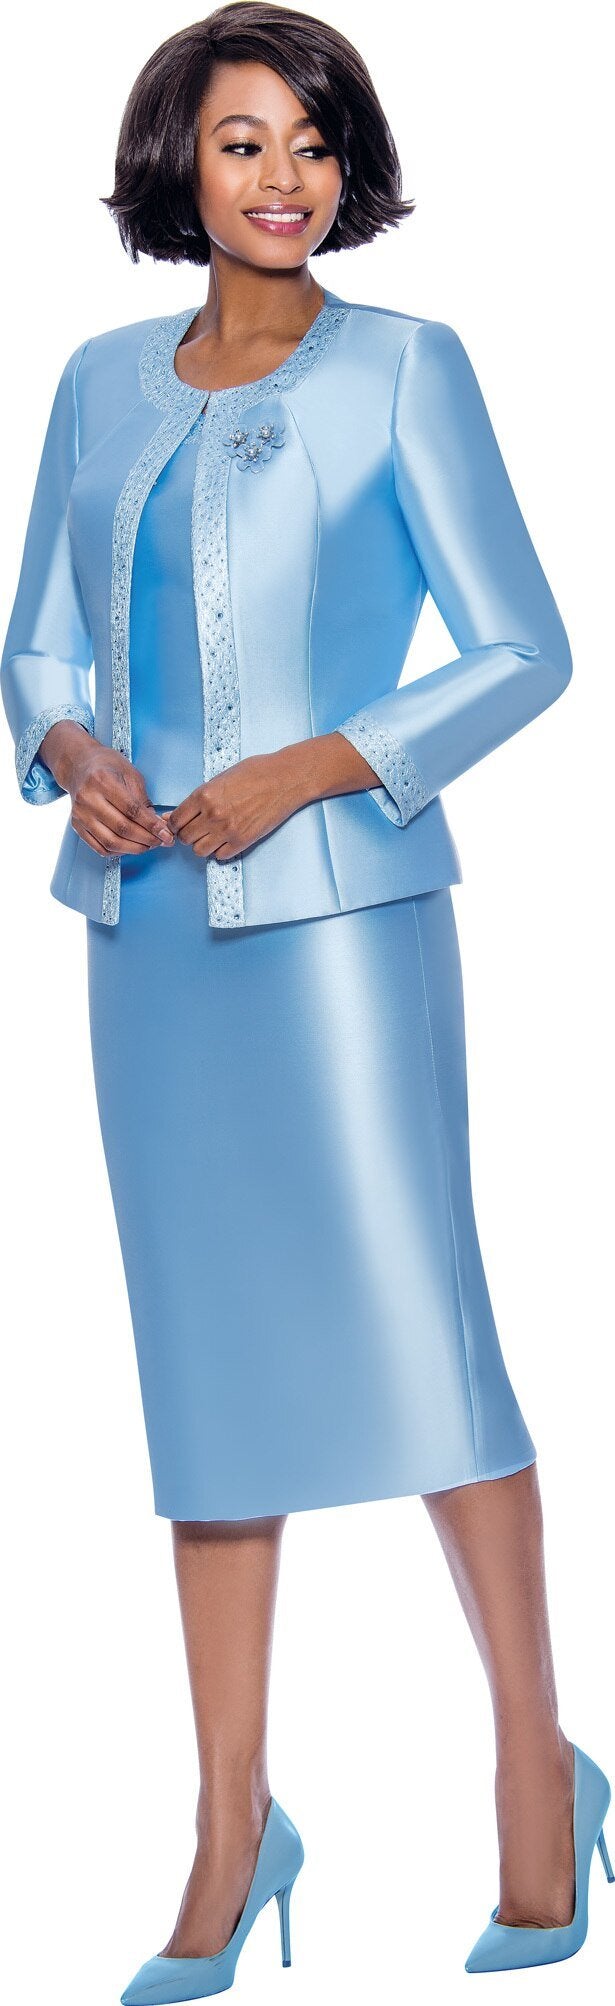 Terramina Suit 7637-Blue - Church Suits For Less